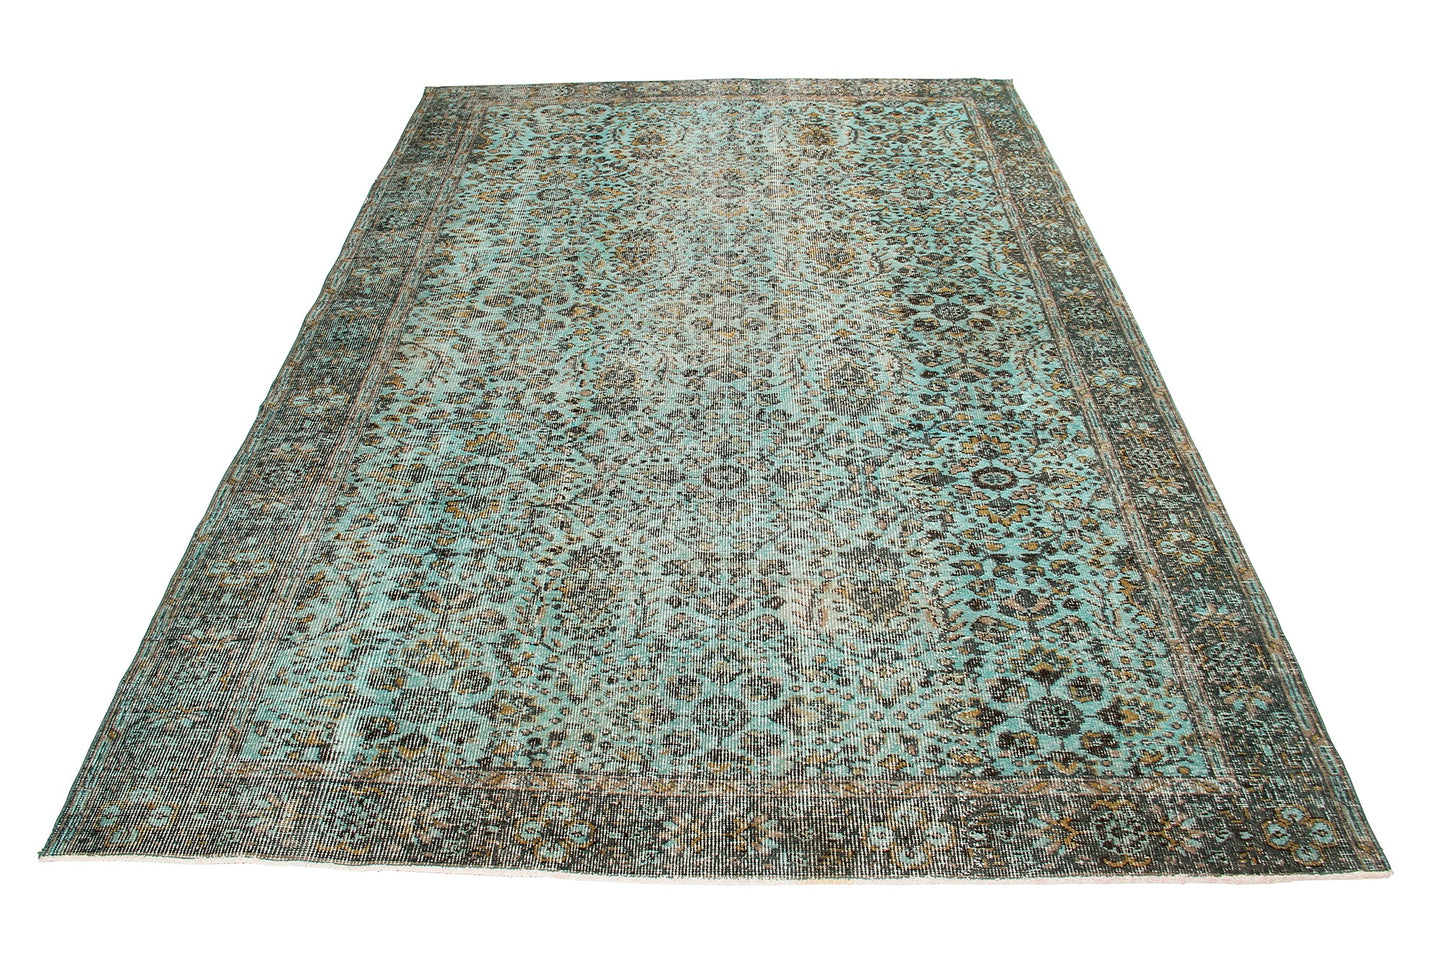 Handmade Turkish Vintage Wool Carpet Traditional Floral  Design product image #27556195729578